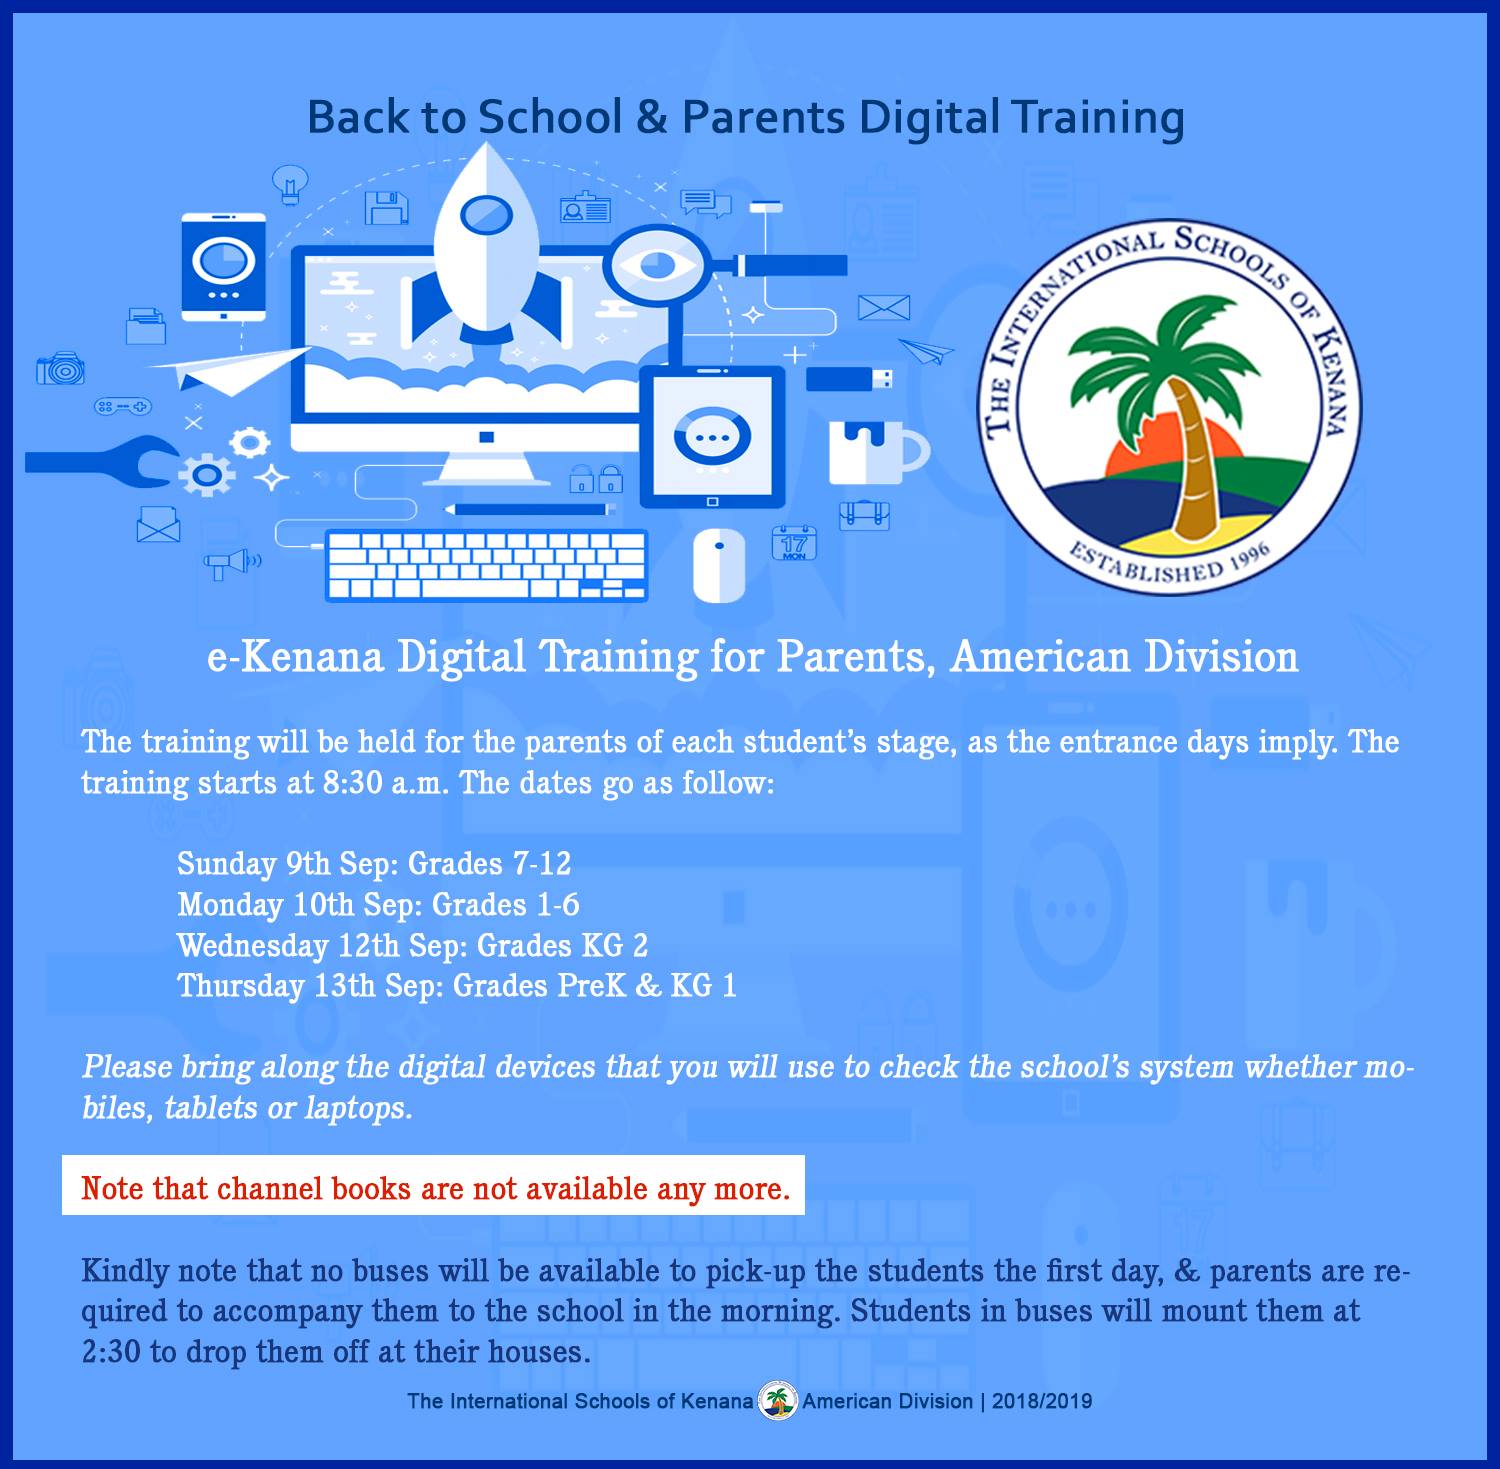 International Schools of kenana | American division - Parents Digital Training